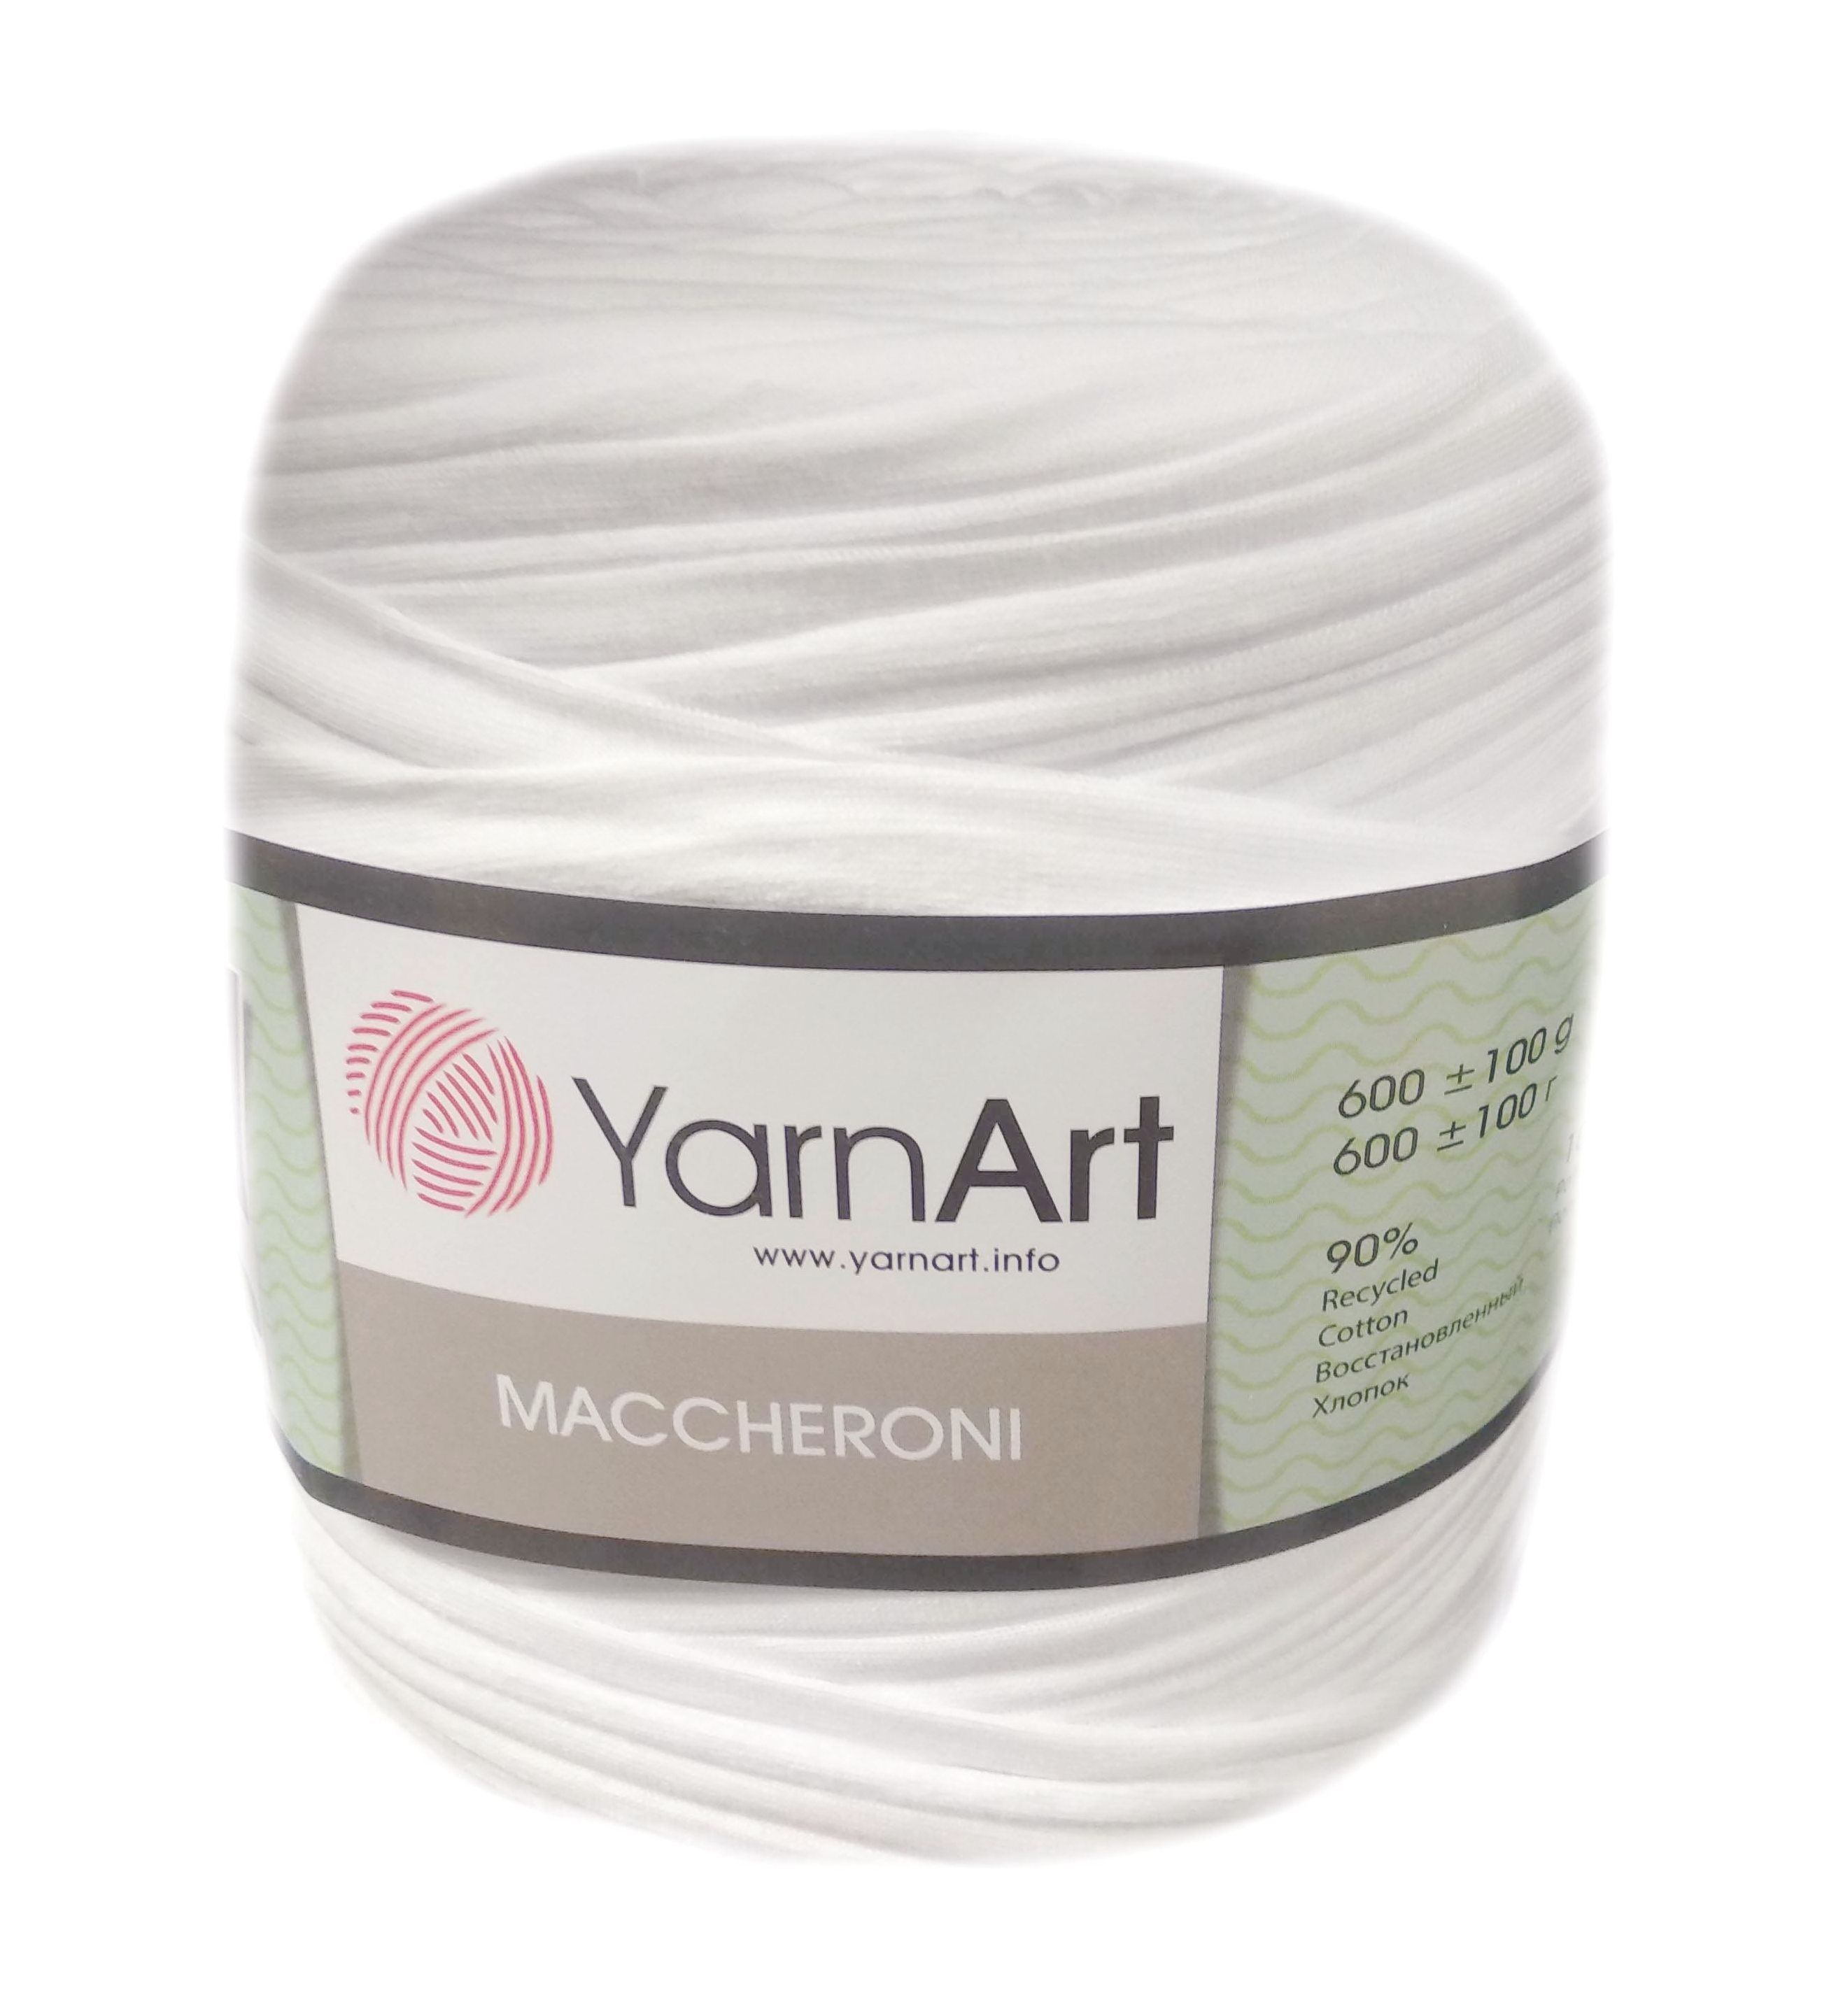 YarnArt MACCHERONI, fehér póló fonal.Tű 12-15 mm.